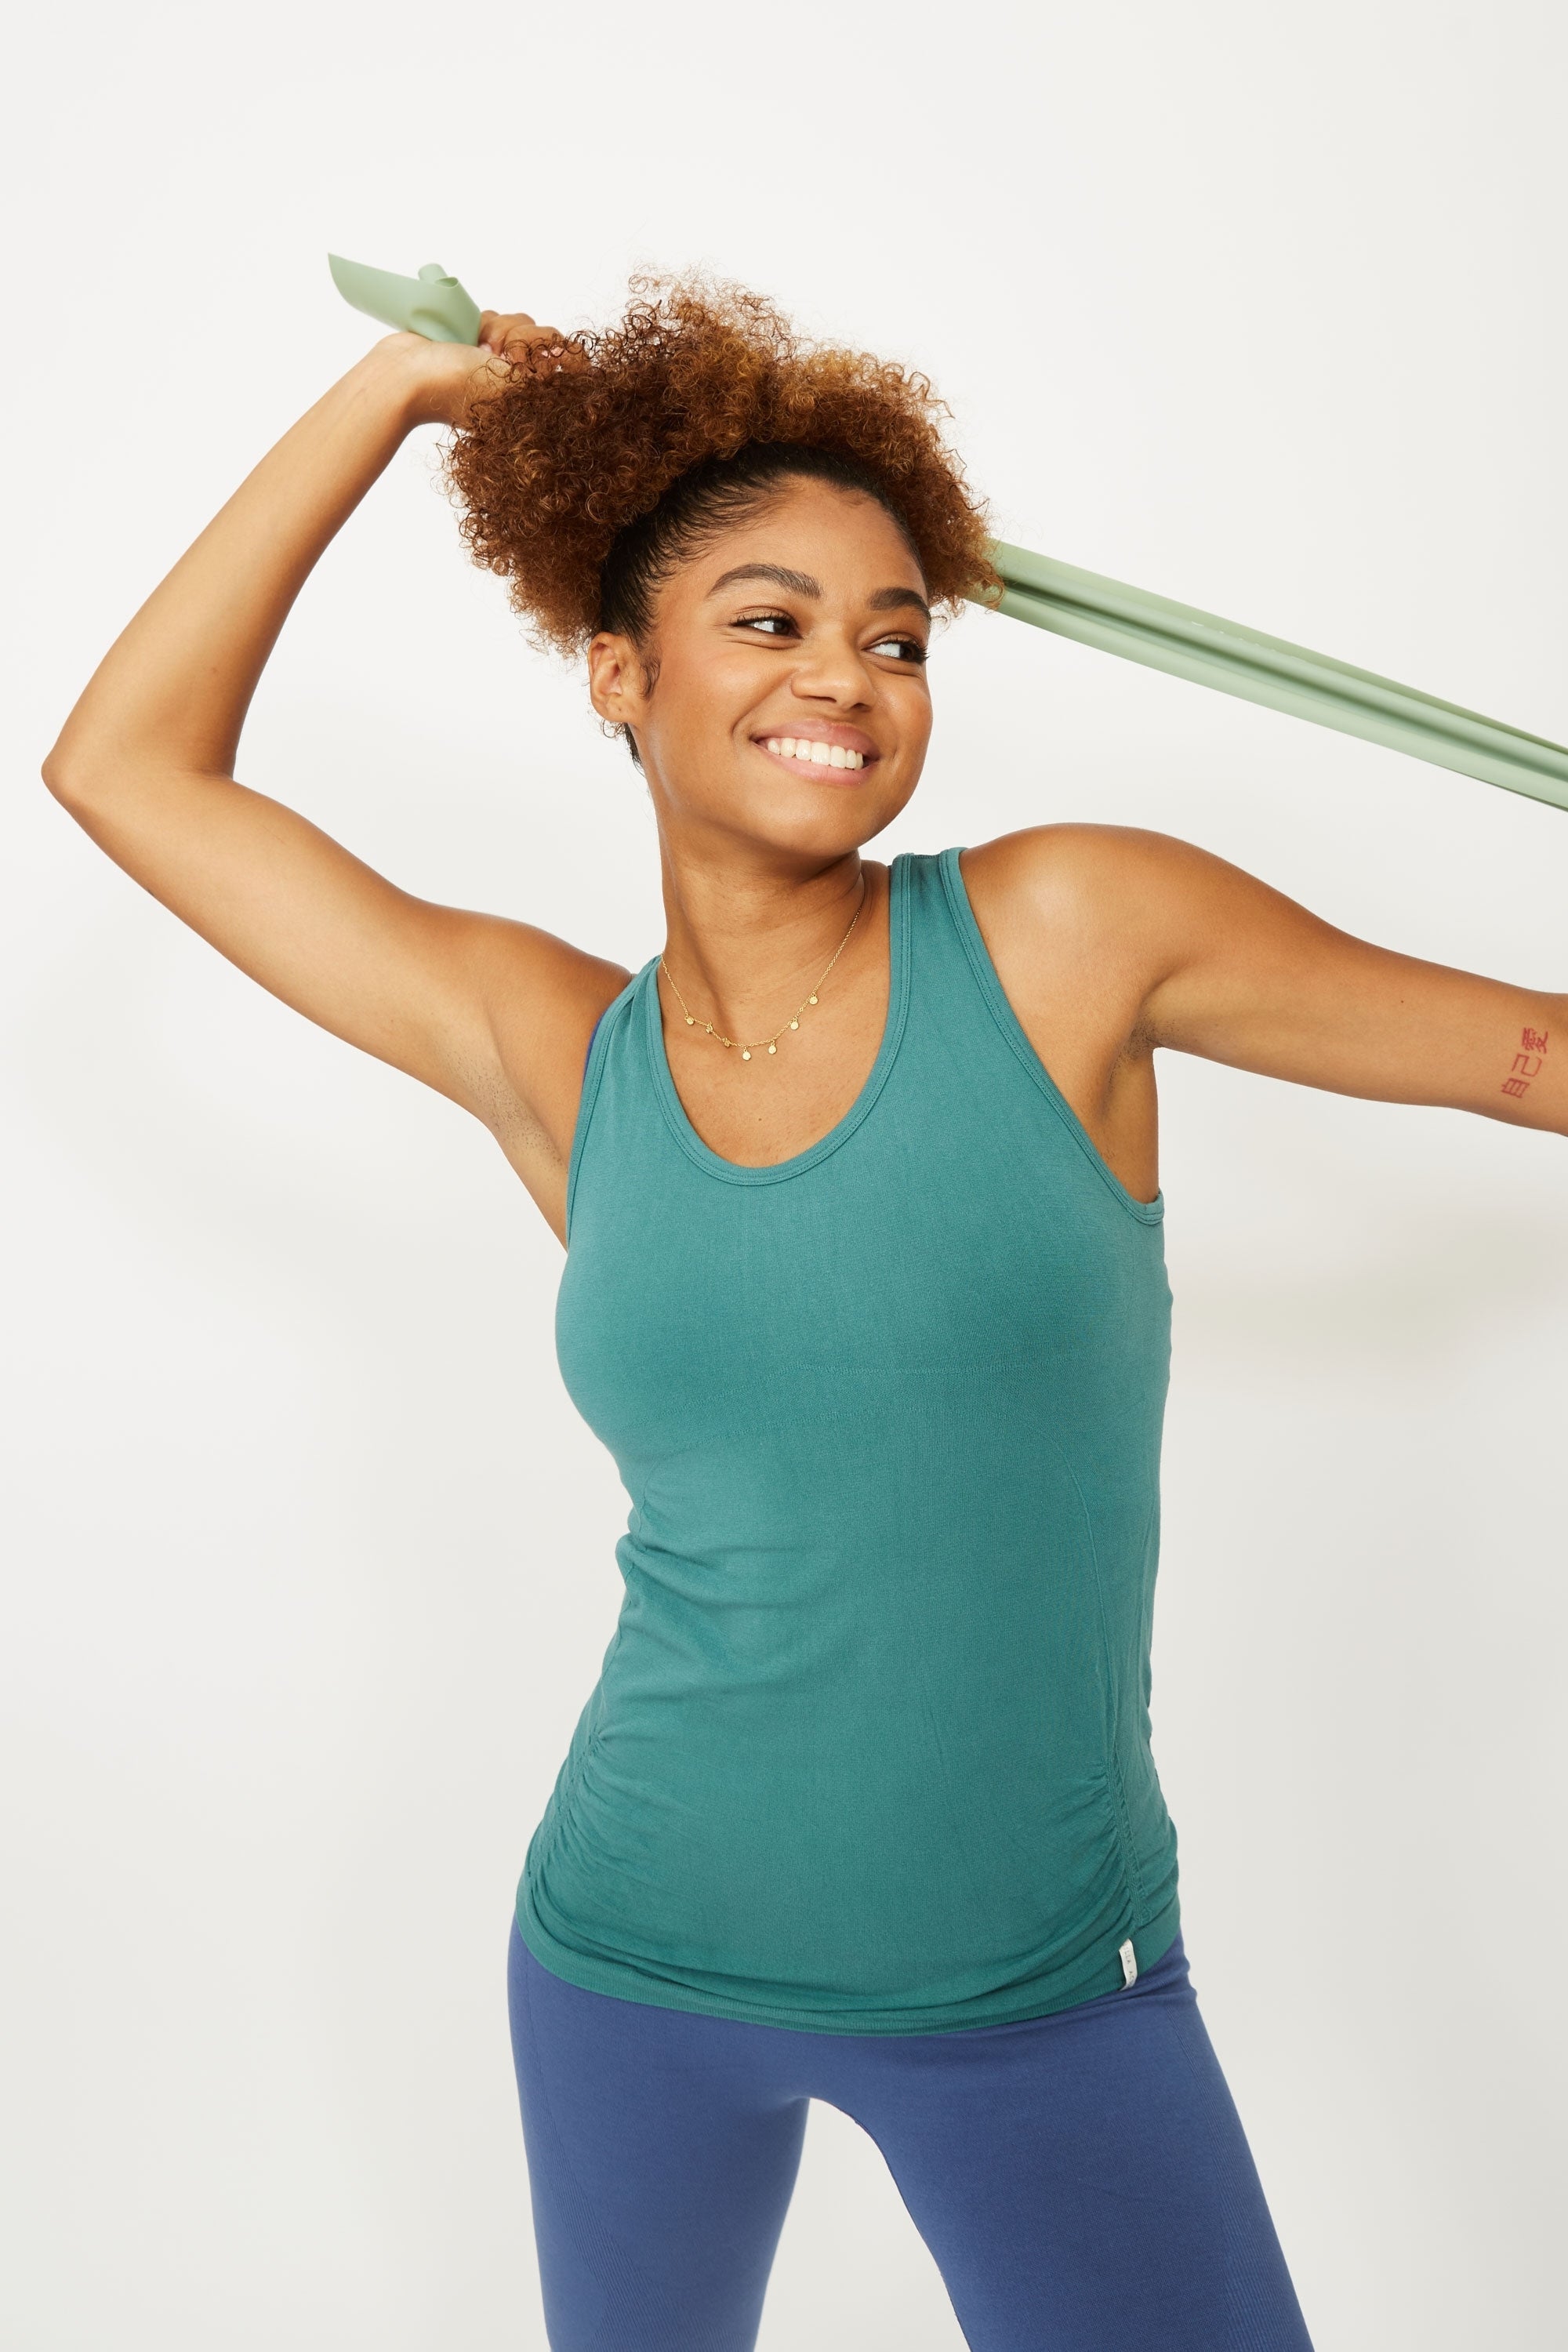 Model wearing emerald green sports tank top for sustainable activewear brand, Jilla